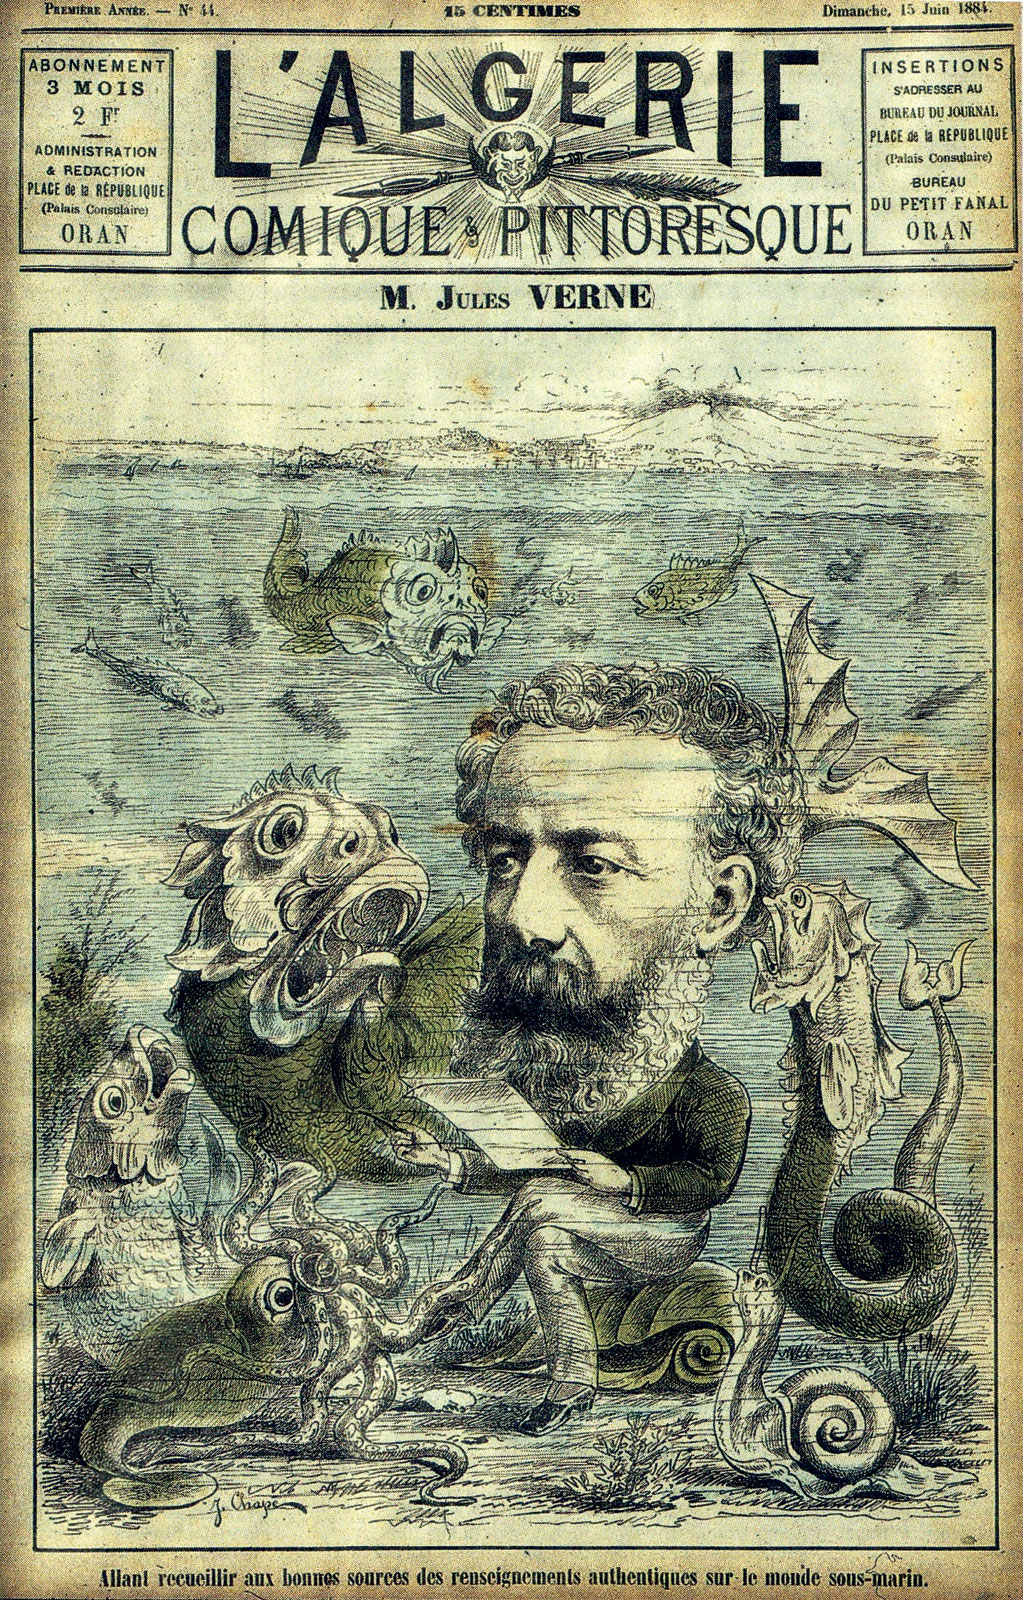 Portada de la revista *L’Algérie Comique et Pittoresque*, 1884 